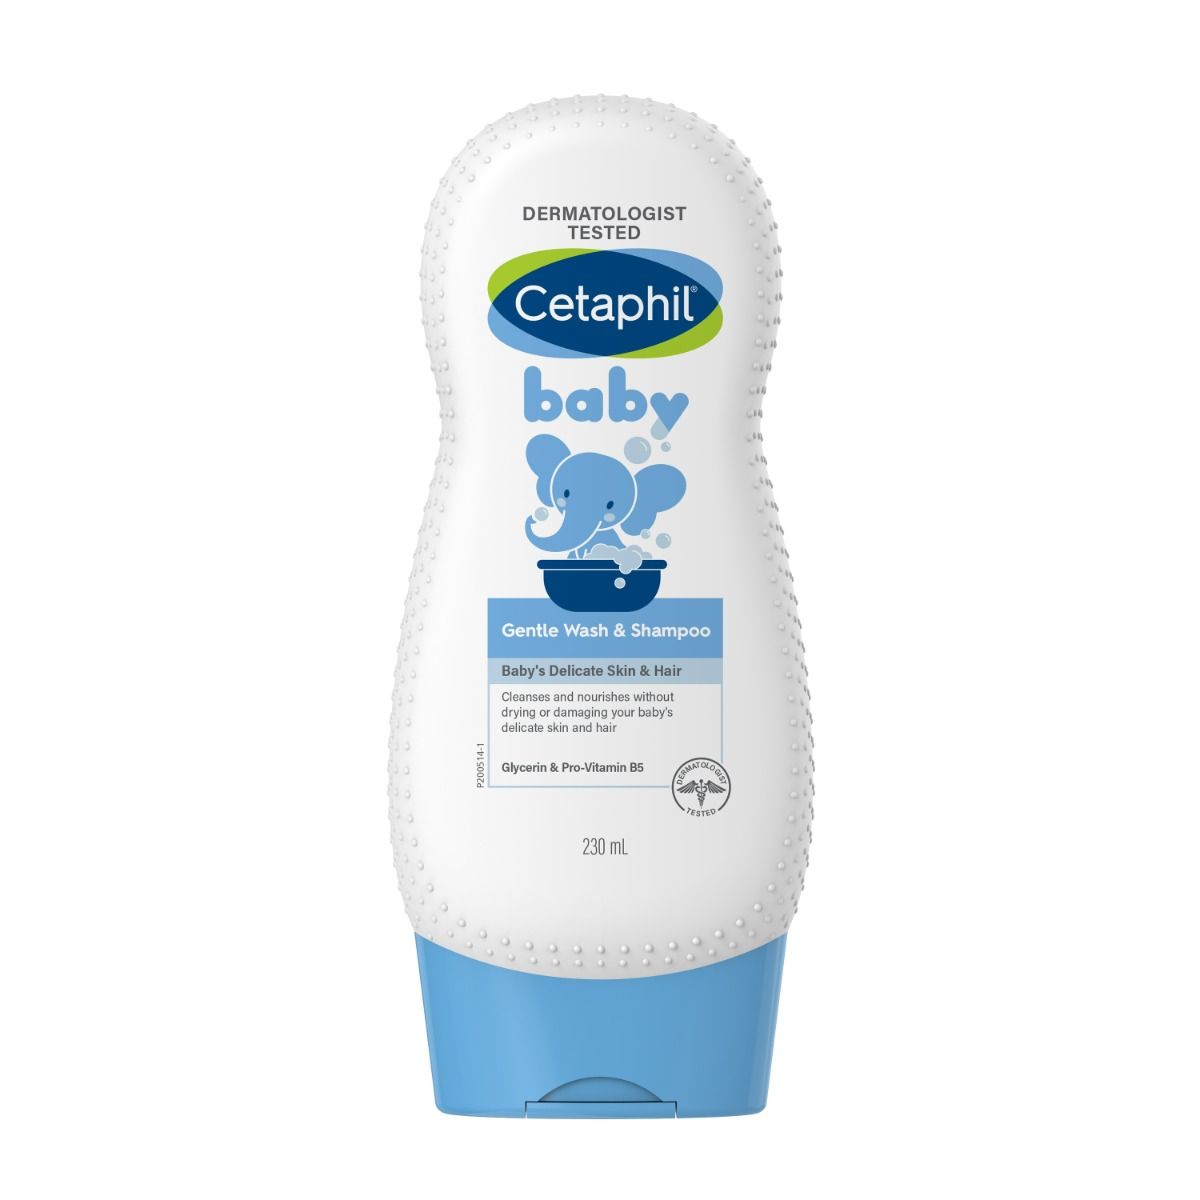 Cetaphil Baby Gentle Wash & Shampoo, 230 ml, Pack of 1 